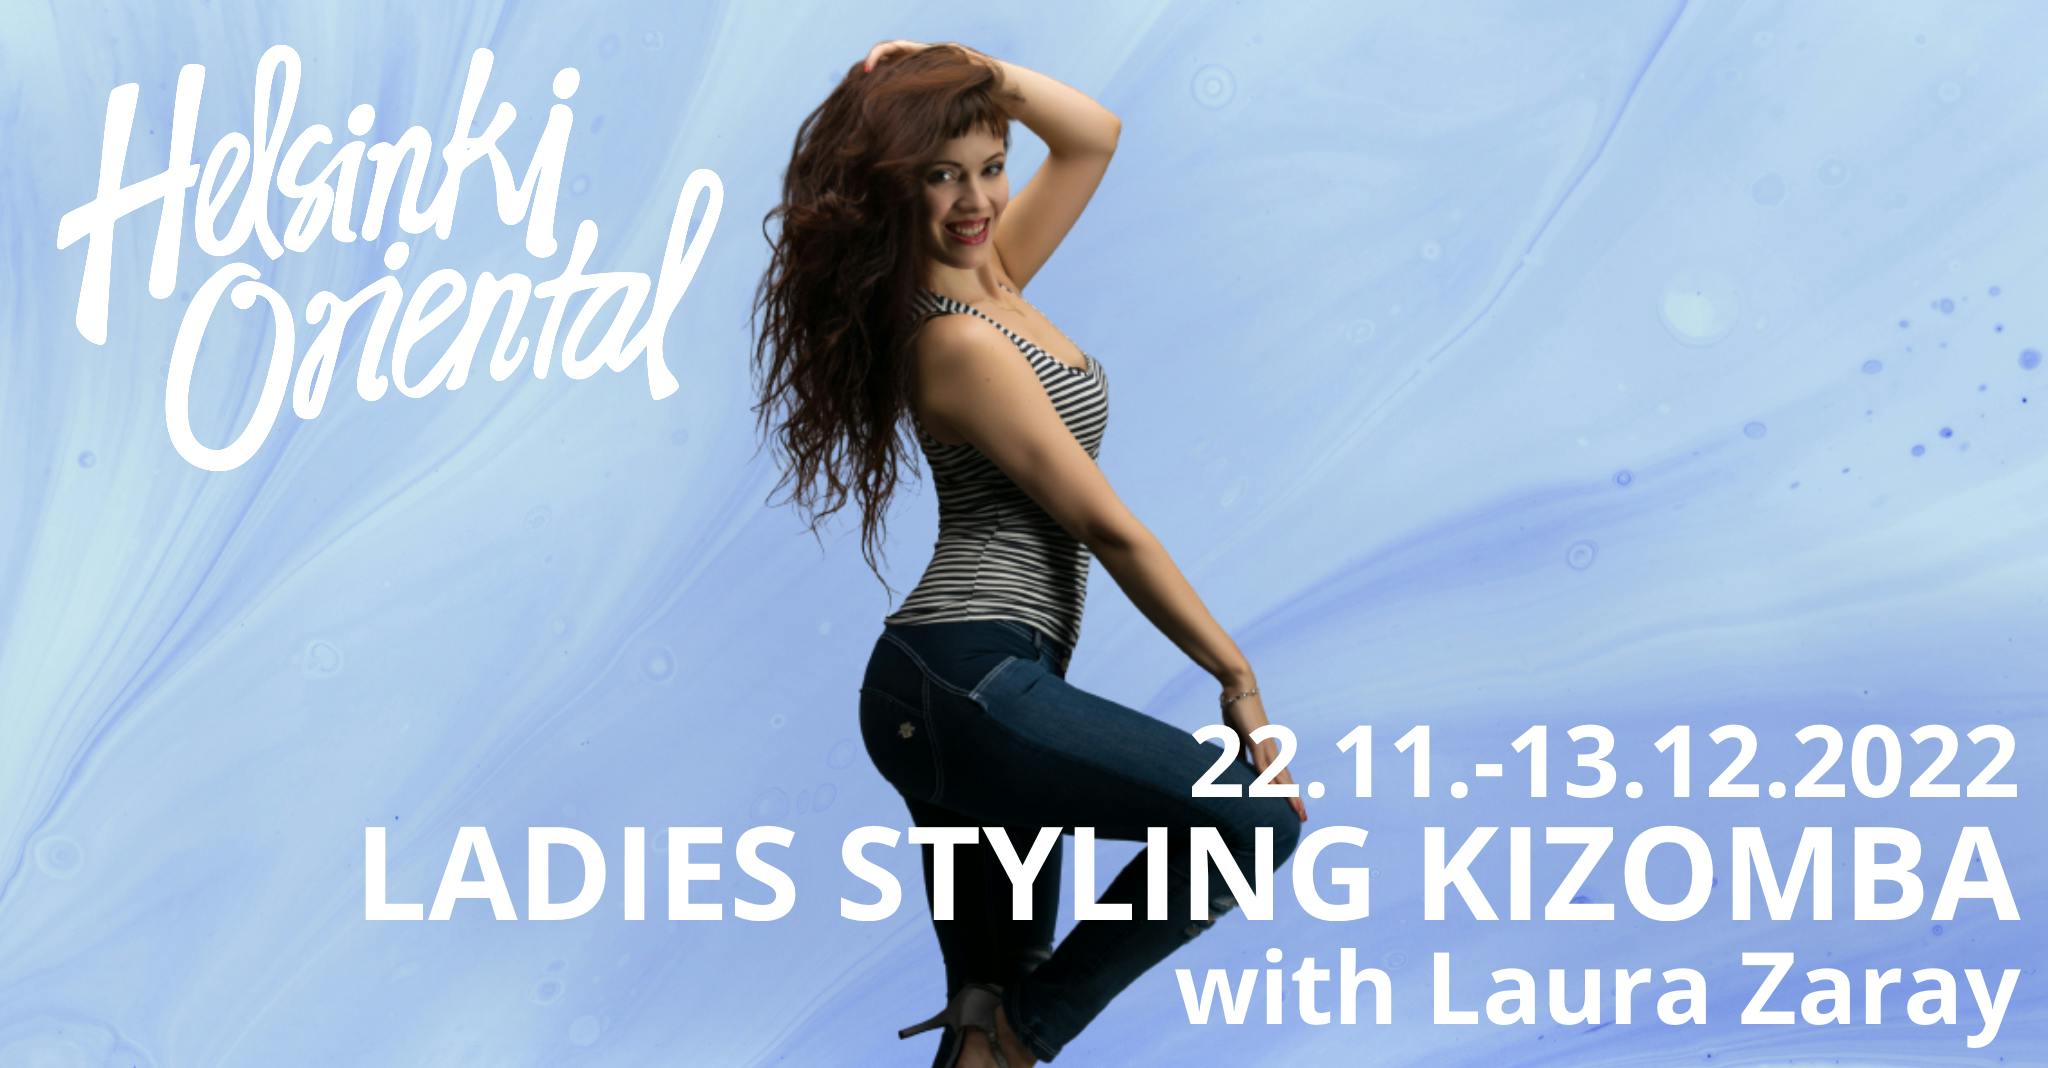 Helsinki Oriental Ladies Styling Kizomba with Laura Zaray 22.11.-13.12.2022